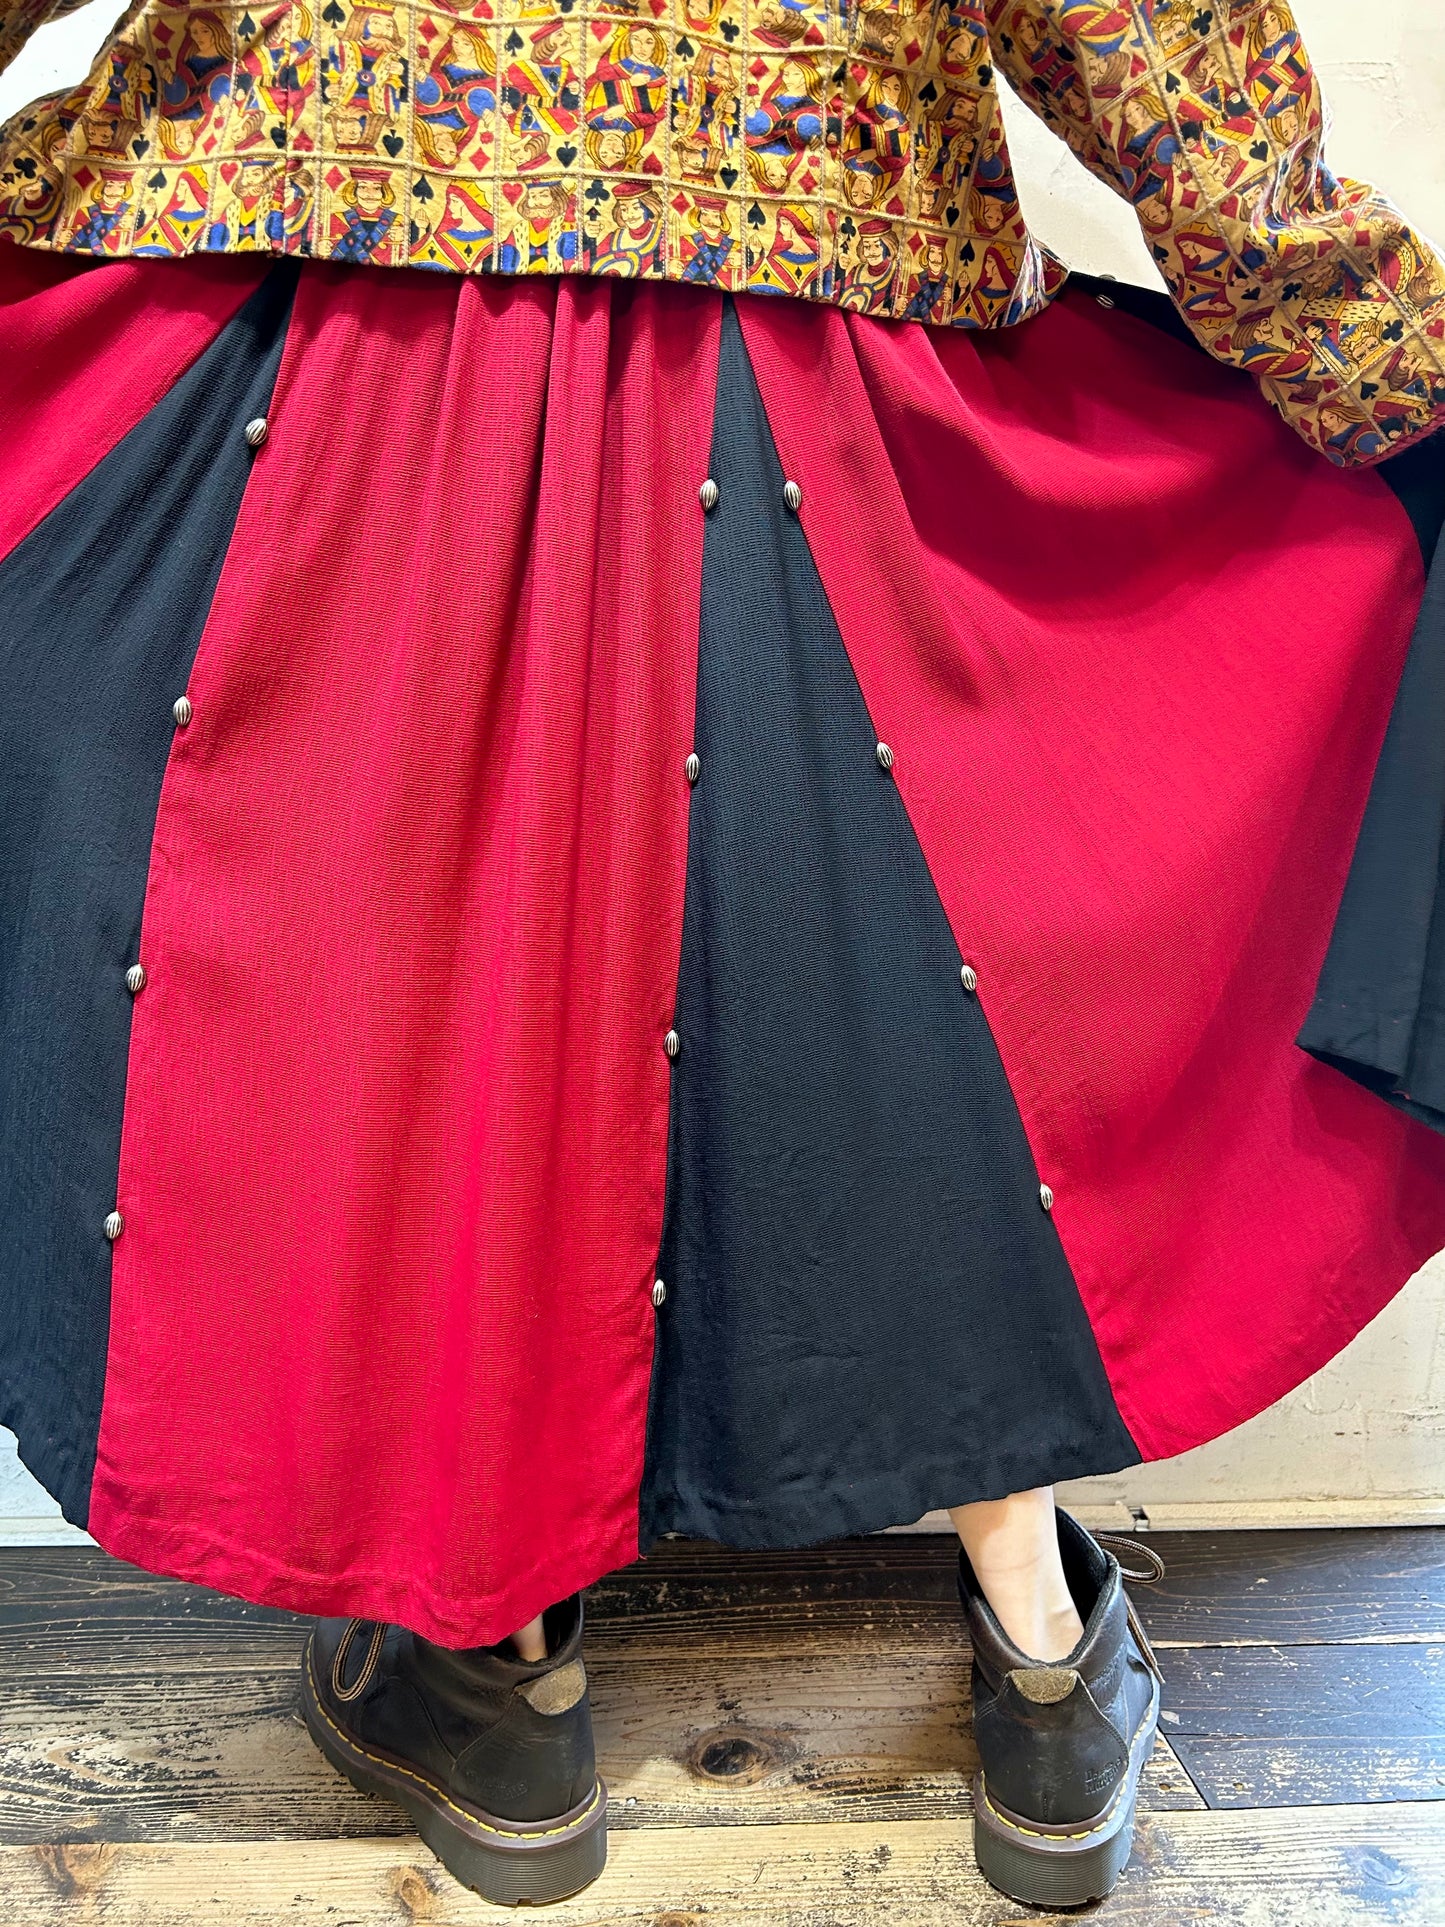 Vintage Skirt [K25449]